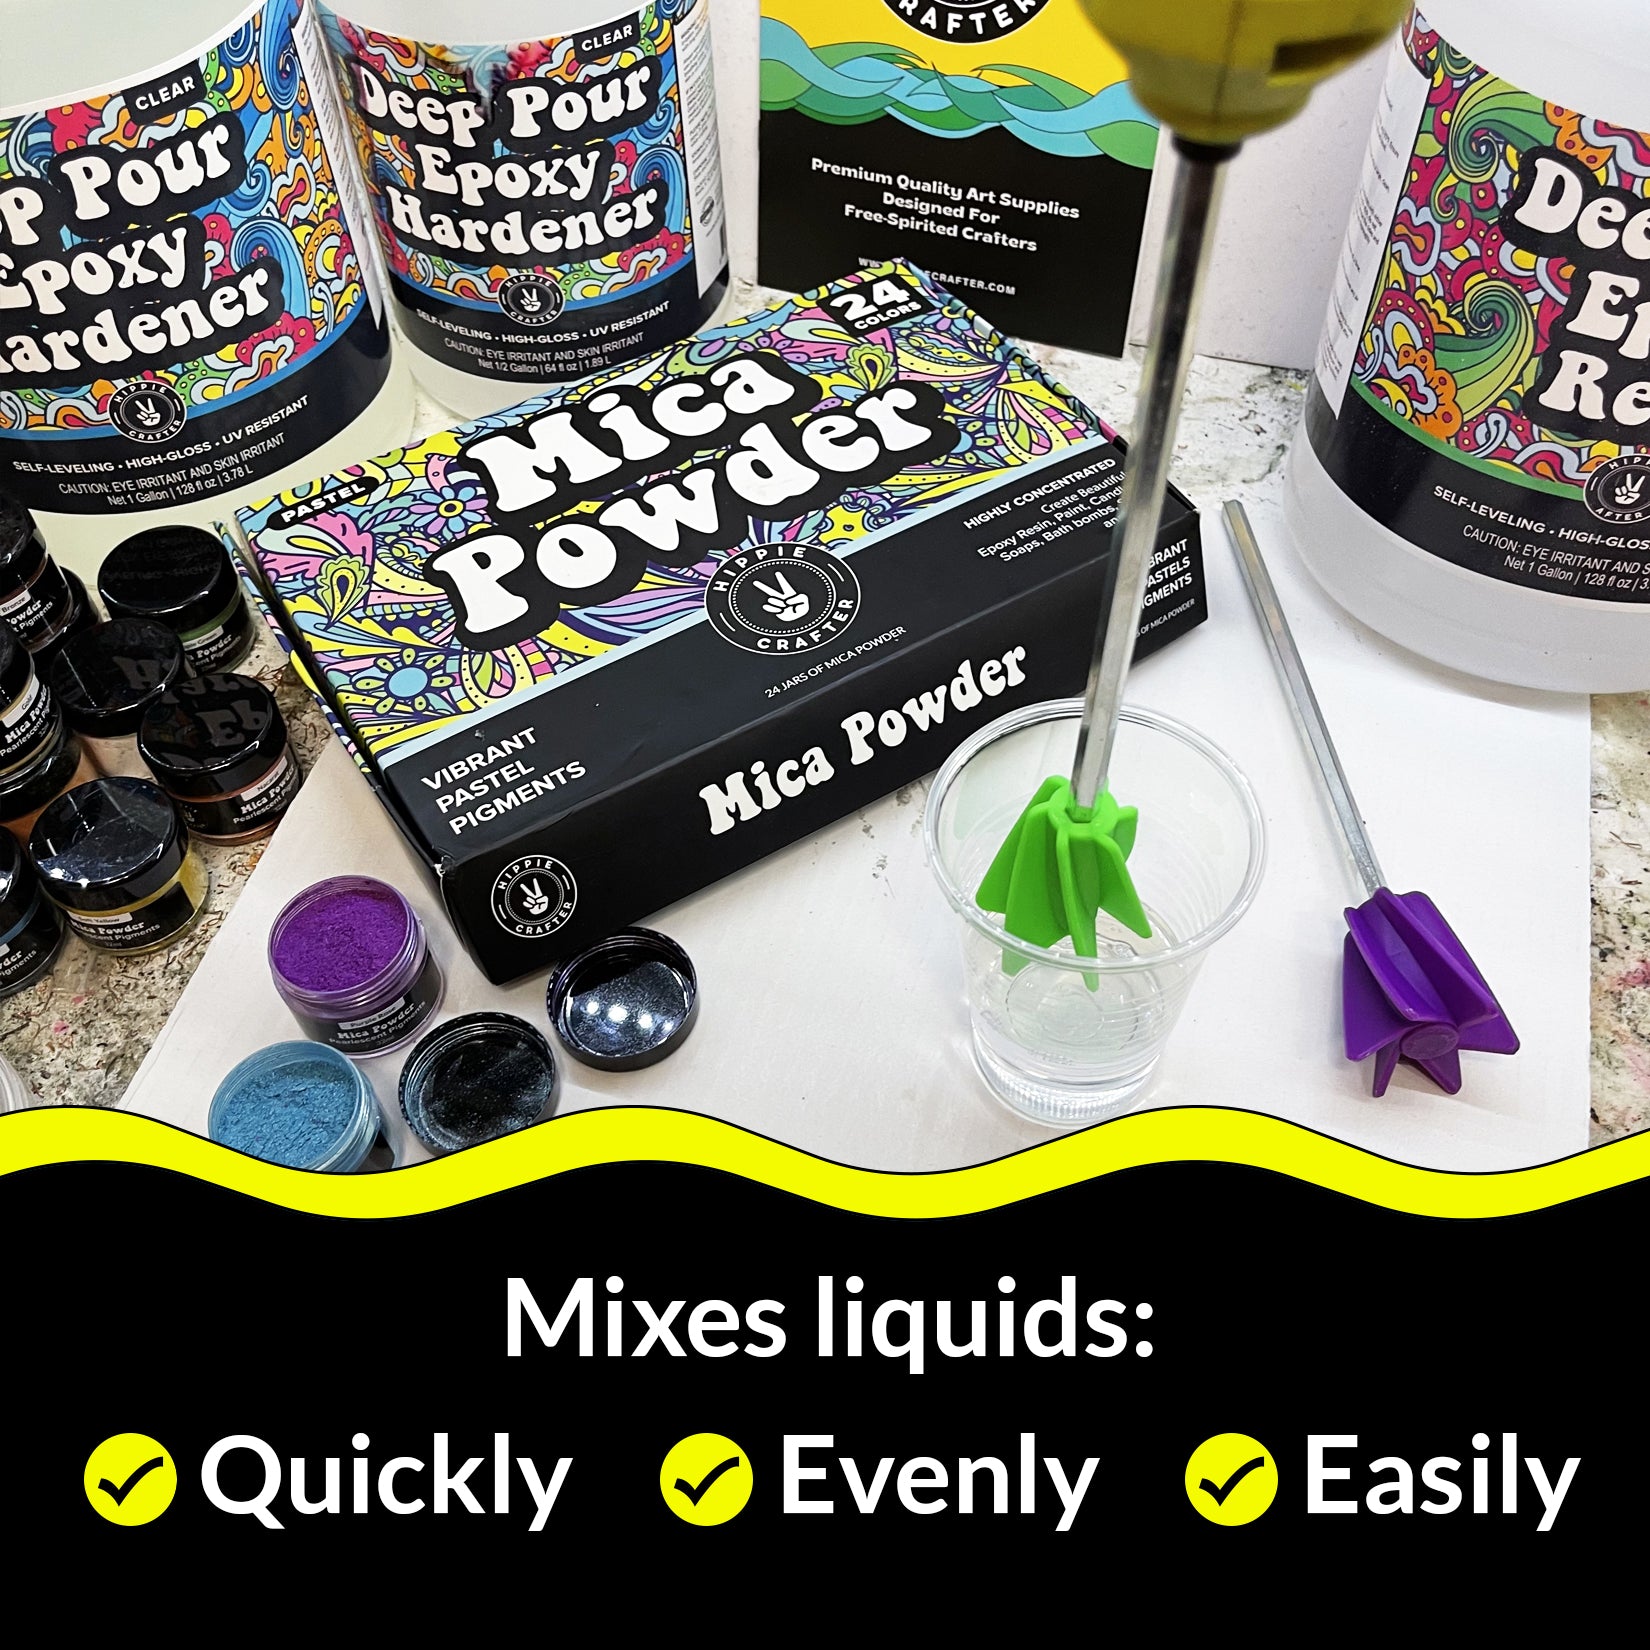 renvena Epoxy Resin Mixer Paddles Paint Mixer Reusable Mixing